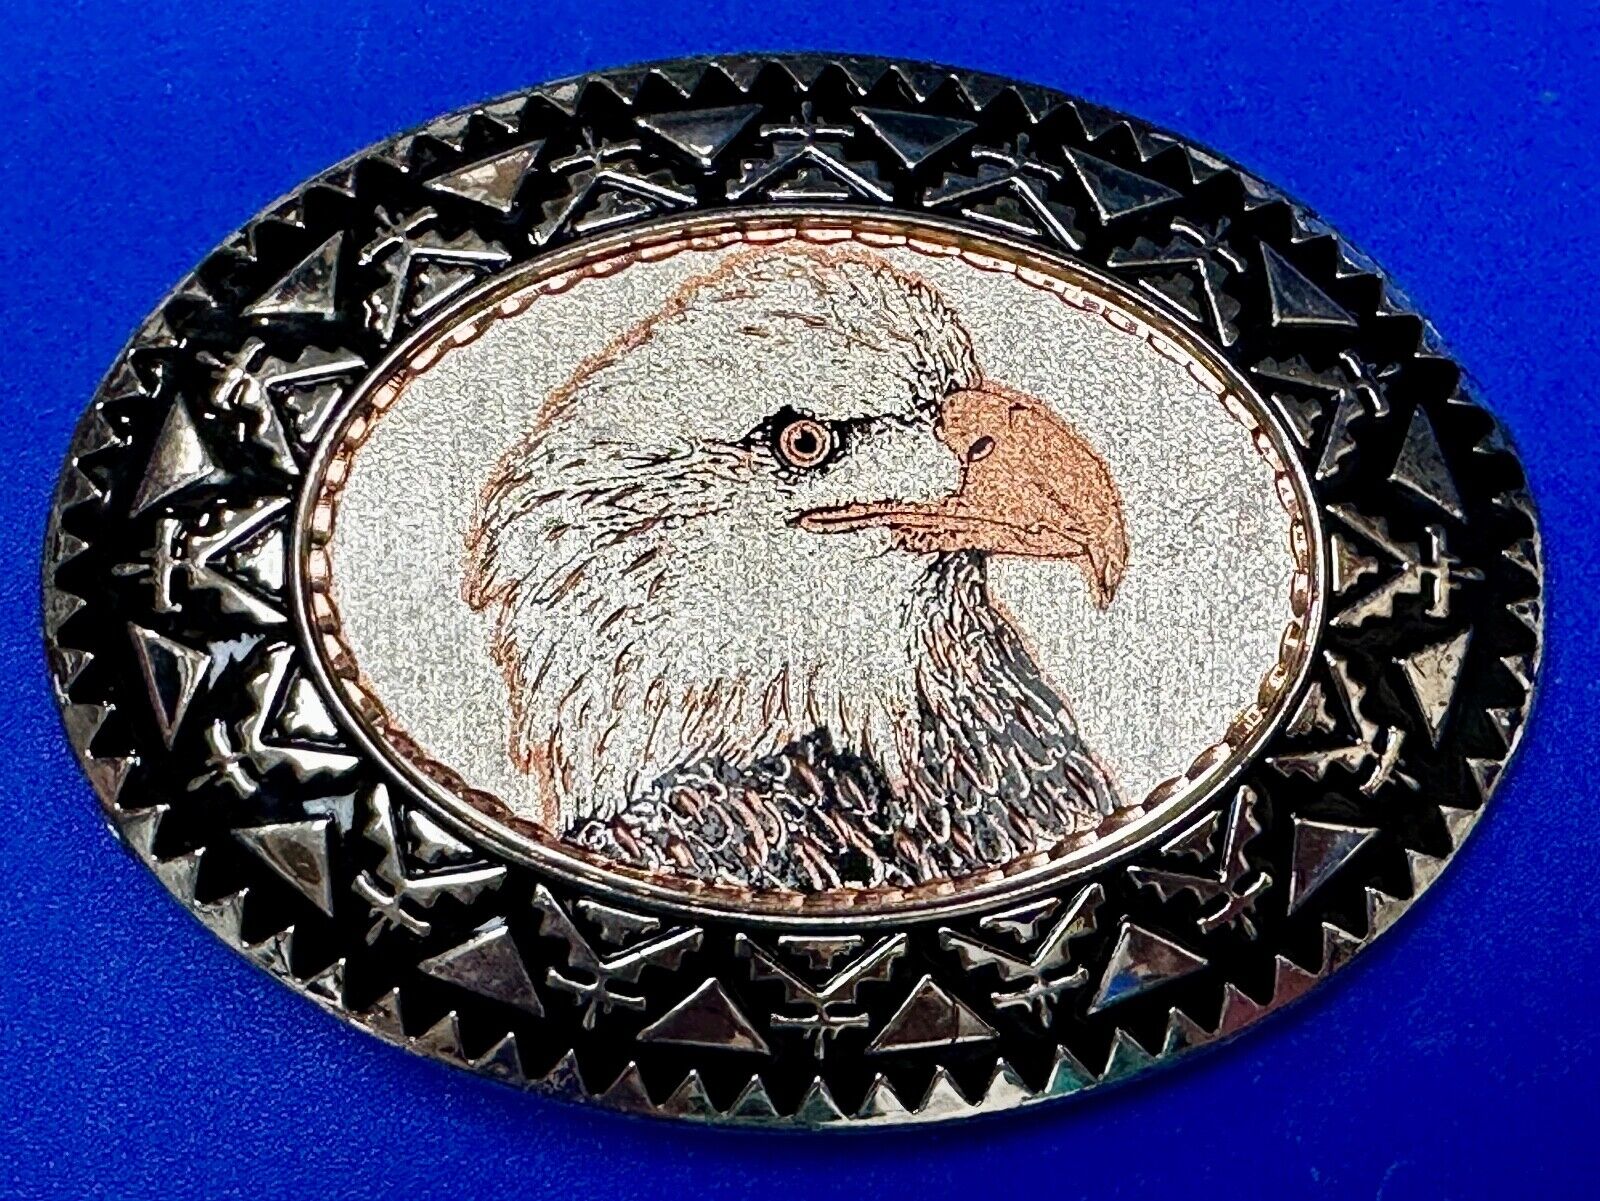 Majestic Bald Eagle - Patriotic American Symbol of Freedom Belt Buckle